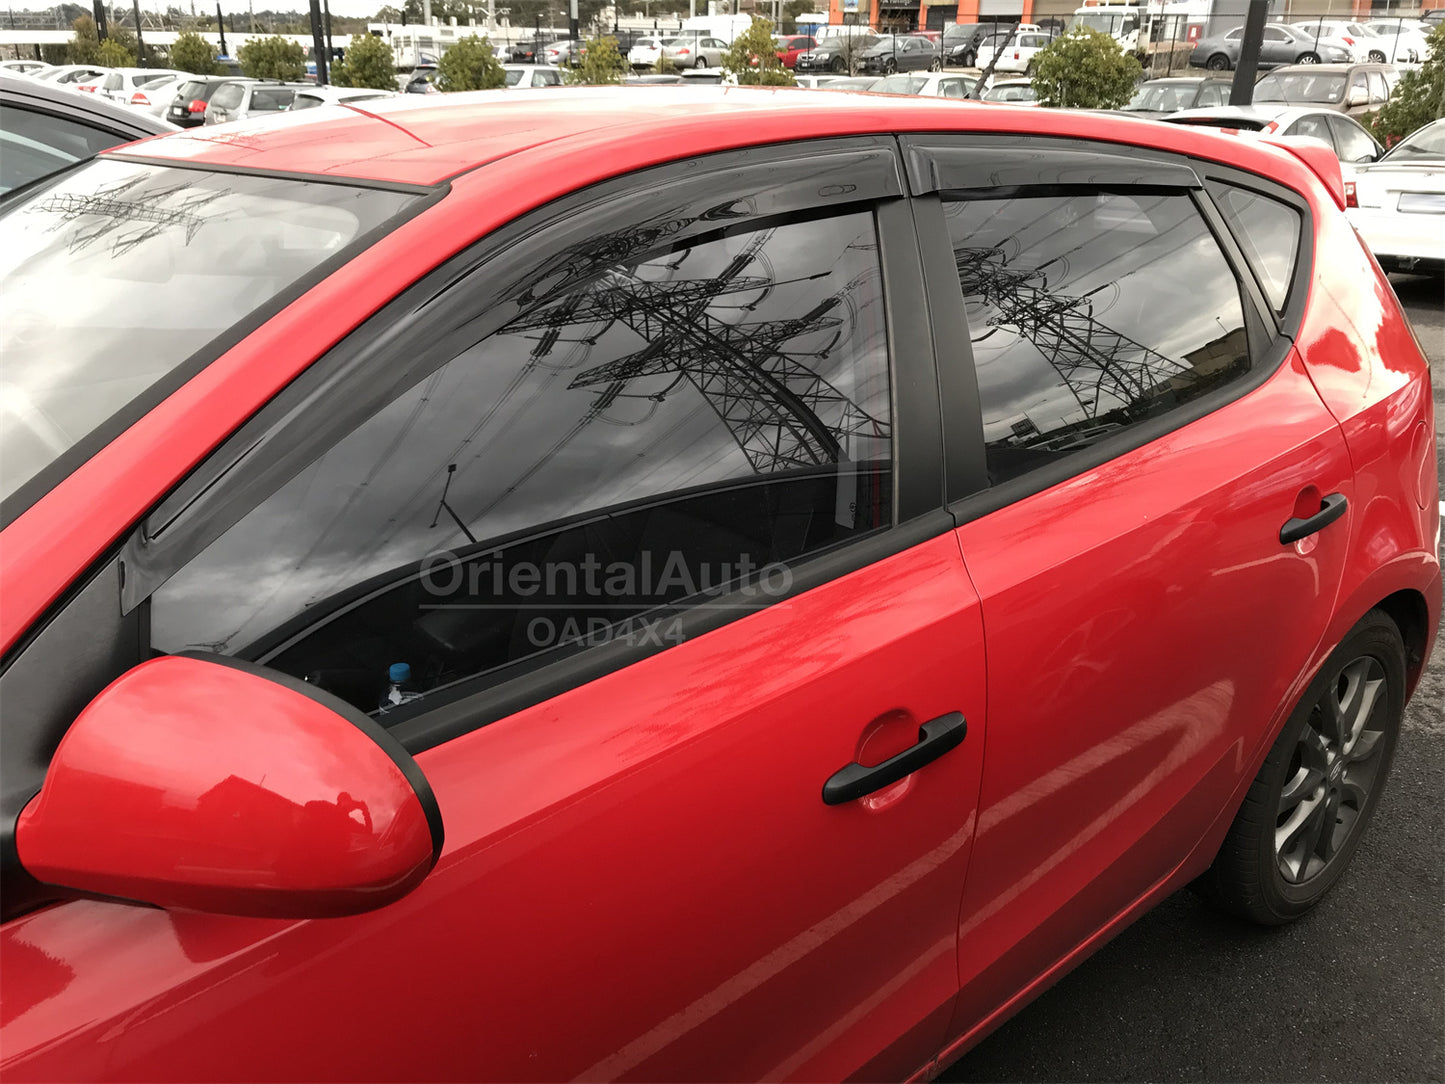 Premium Weathershields Weather Shields Window Visor For Hyundai I30 Hatch 5 doors 2007-2012